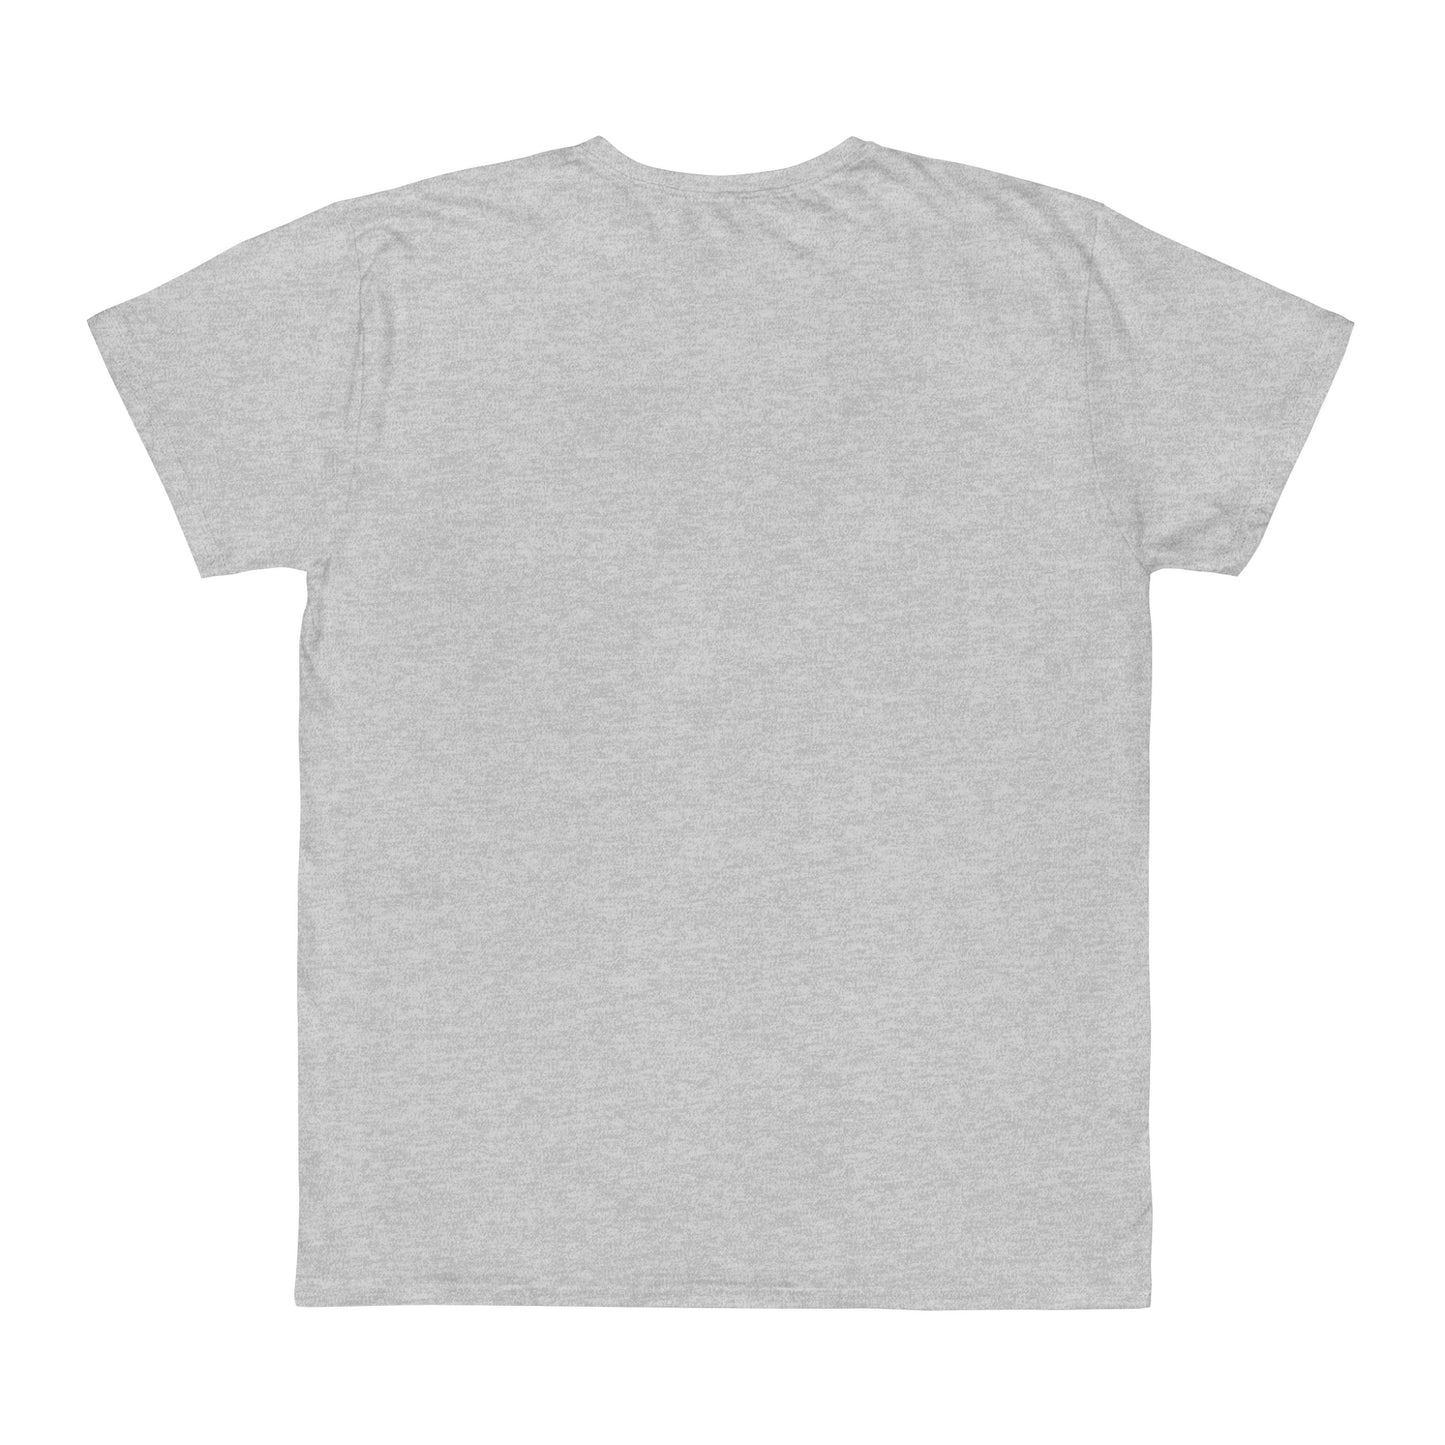 Tita Unisex Iconic T-Shirt